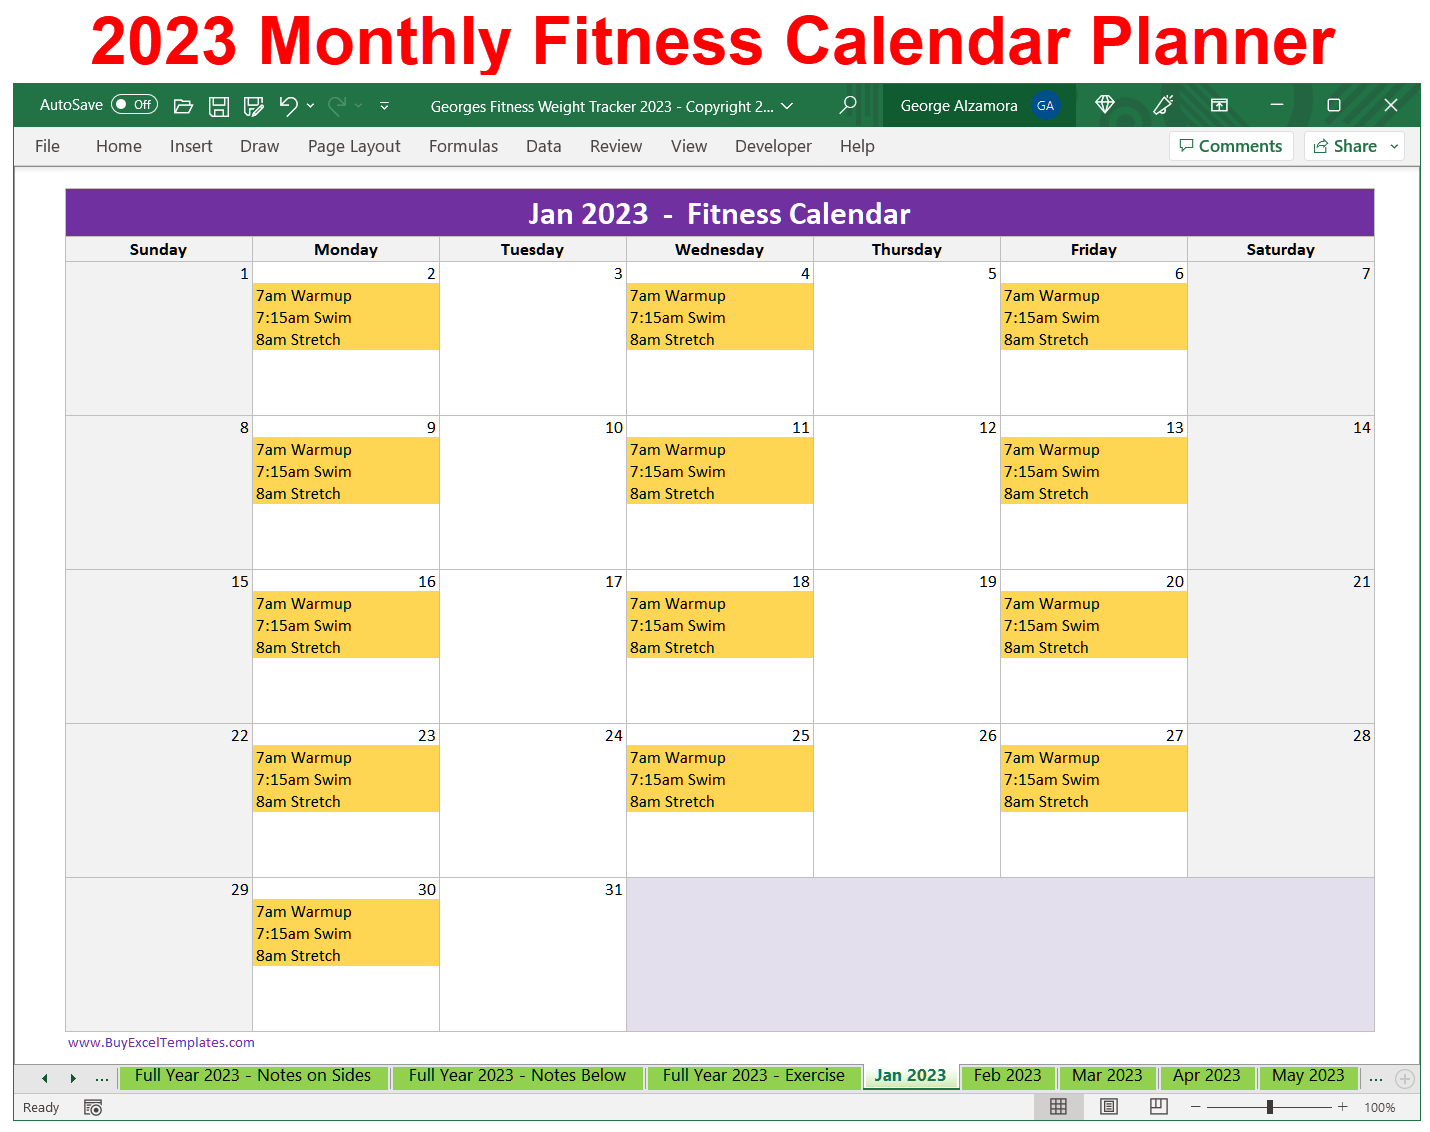 2023 Monthly Fitness Planner Spreadsheet